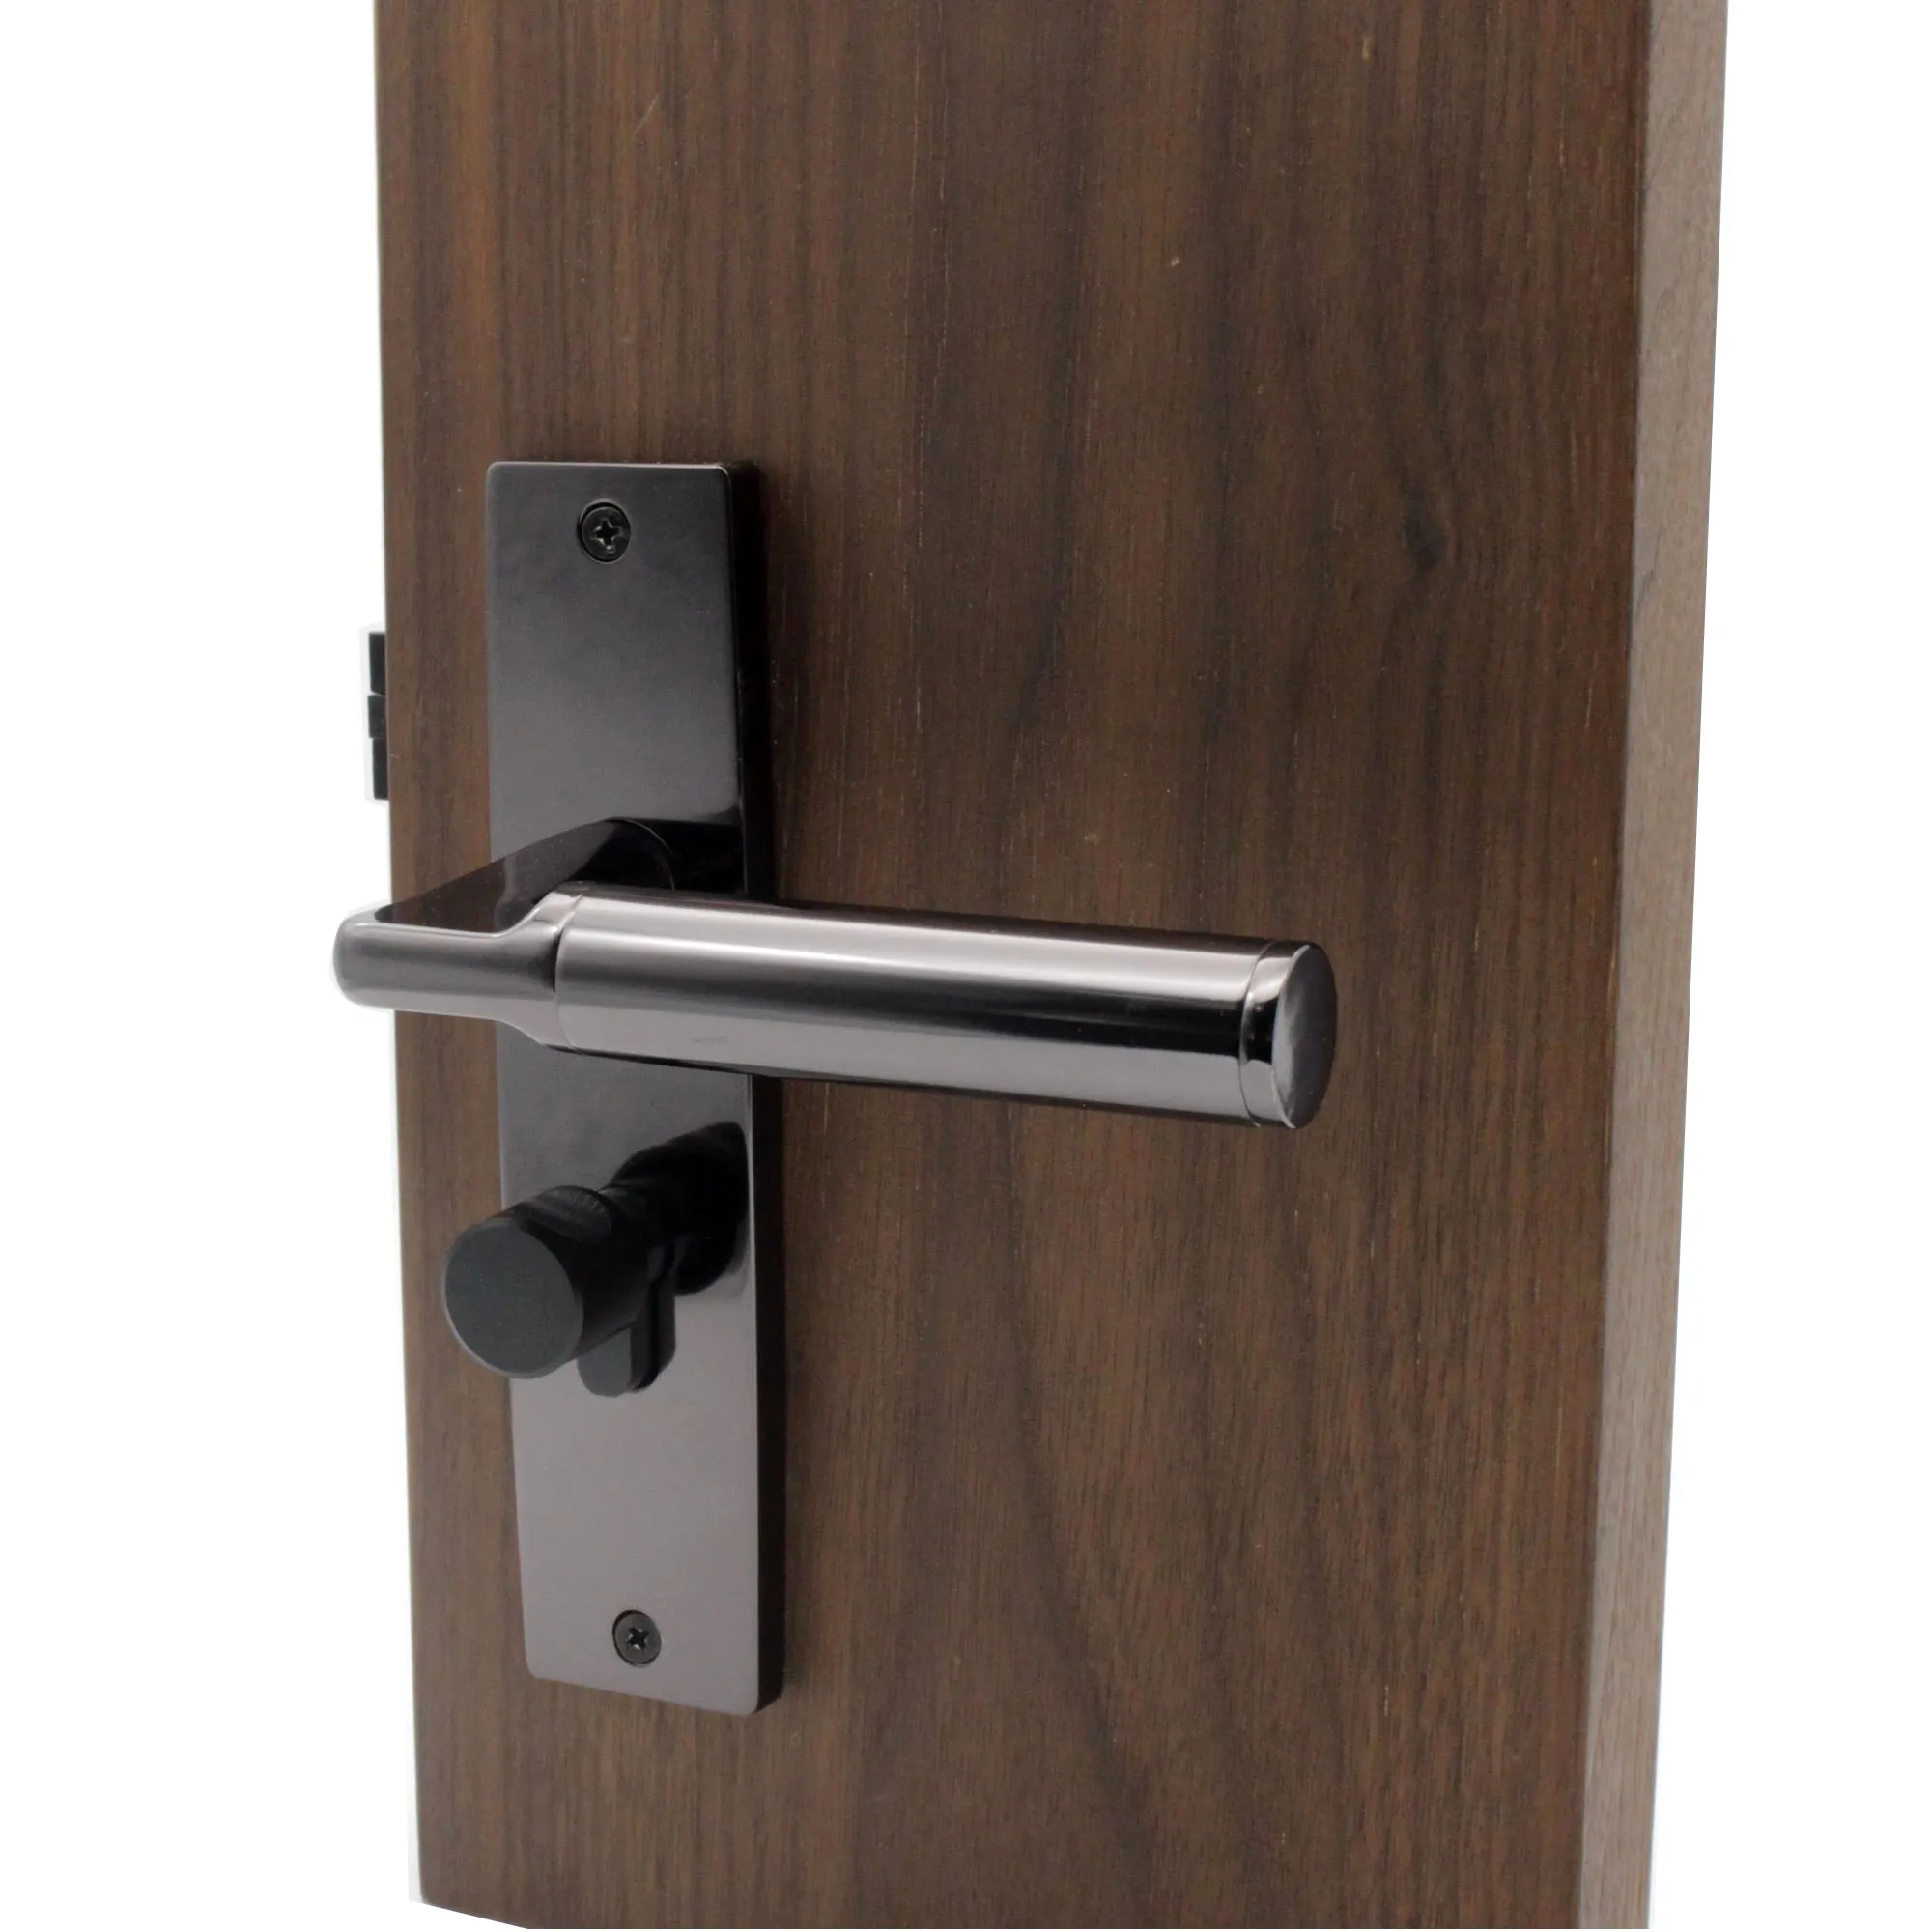 JOYSHARE locks company lock of pressure door locking system for doors